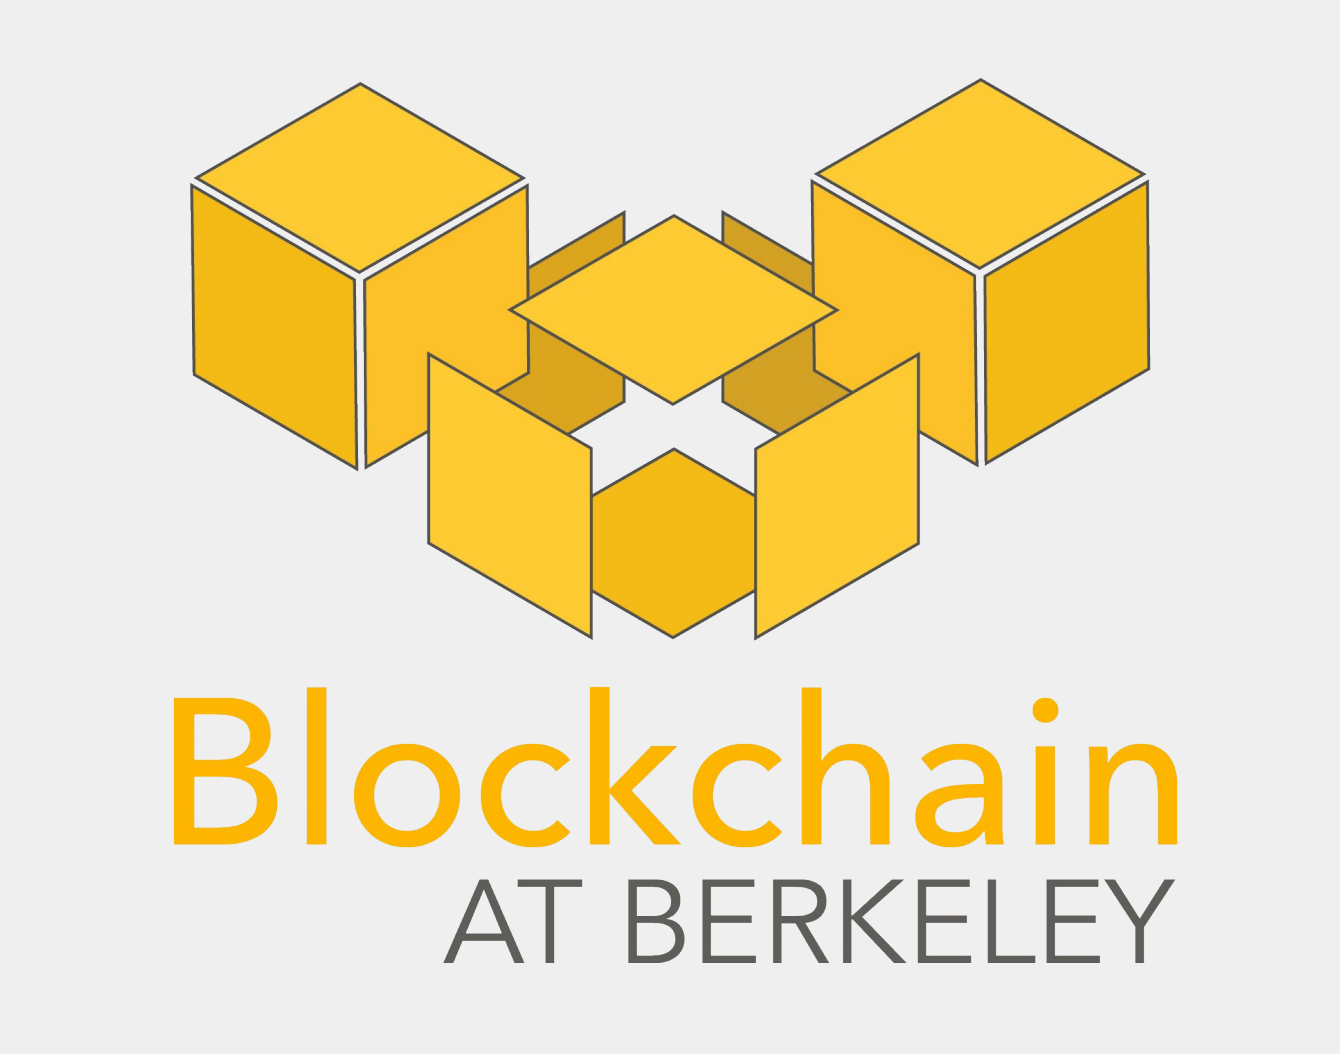 Uc berkeley blockchain 33 bitcoin in euro